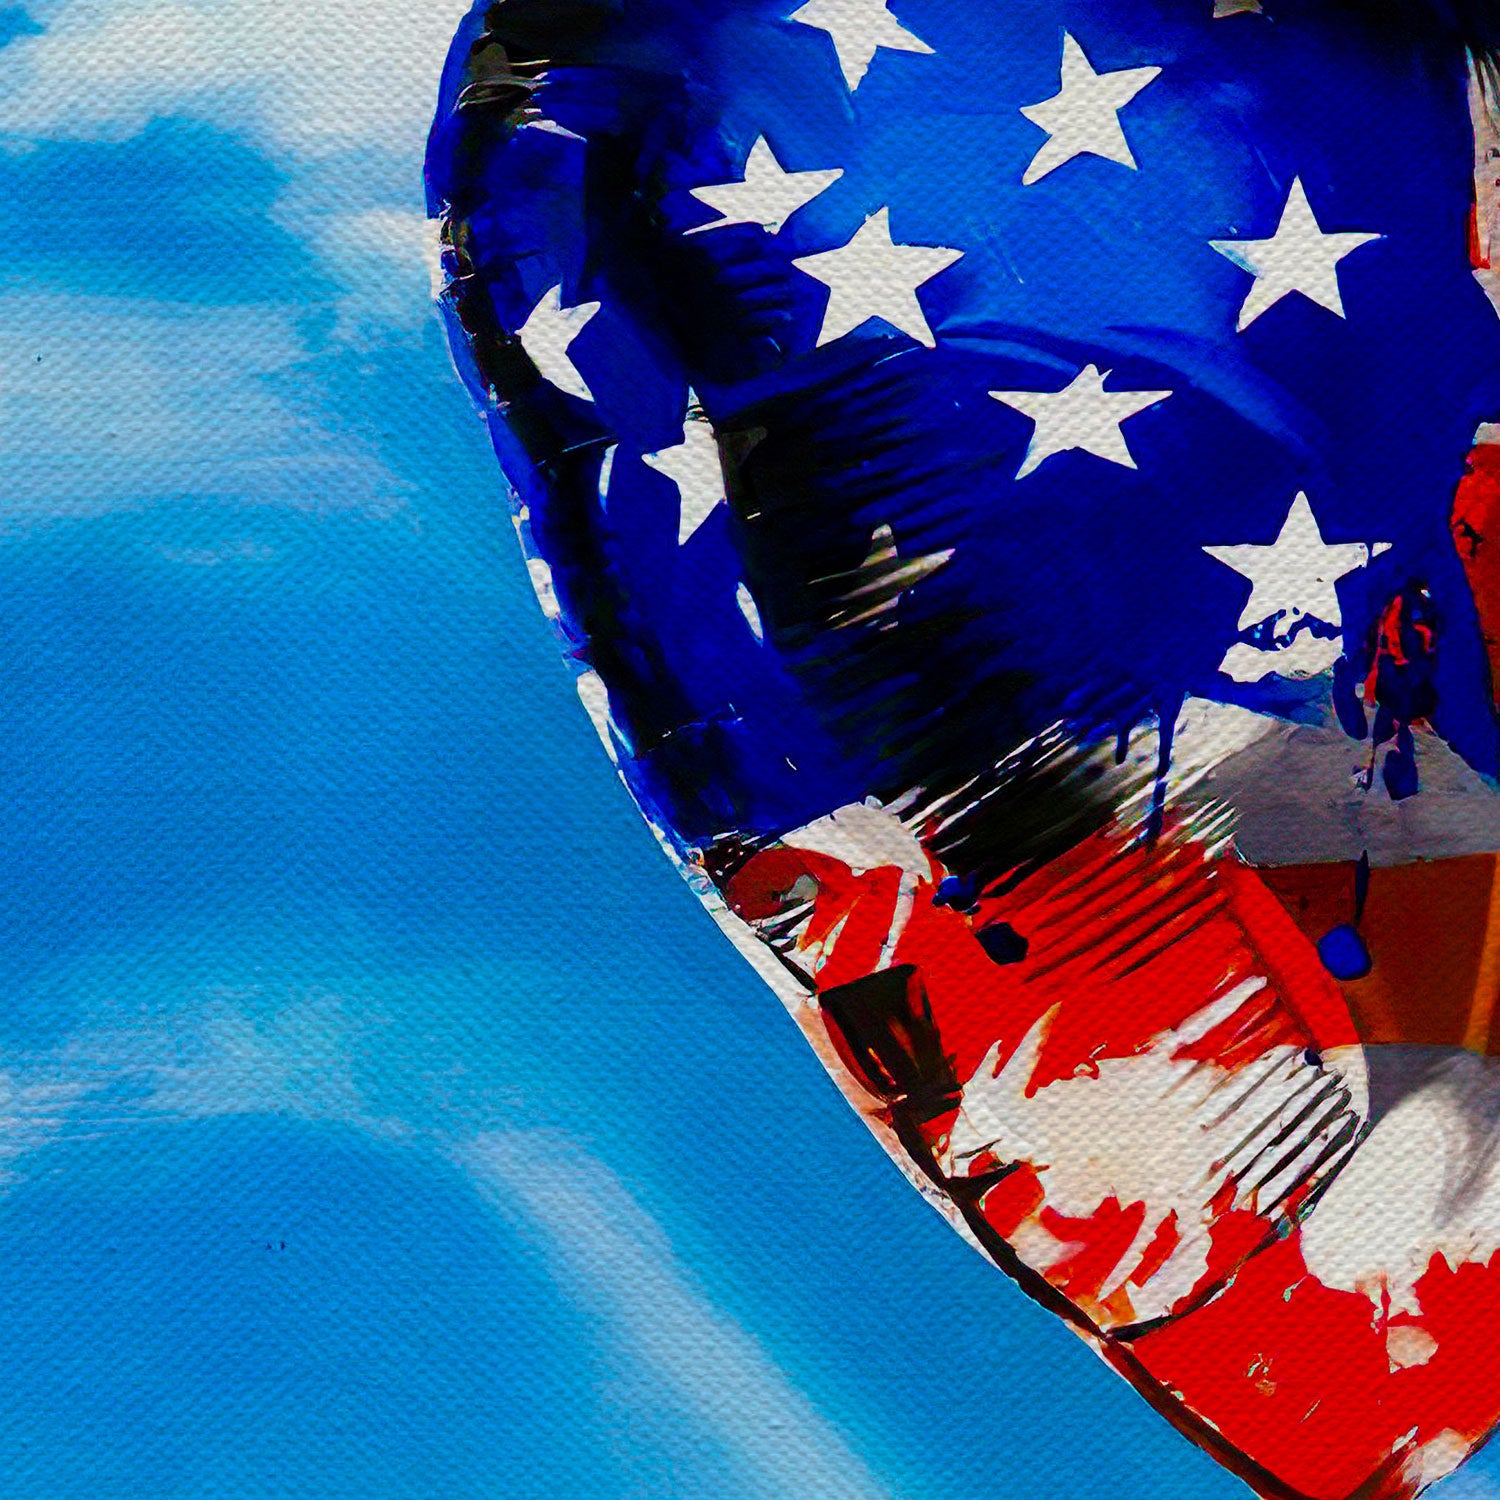 American Flag Balloon Canvas Wall Art